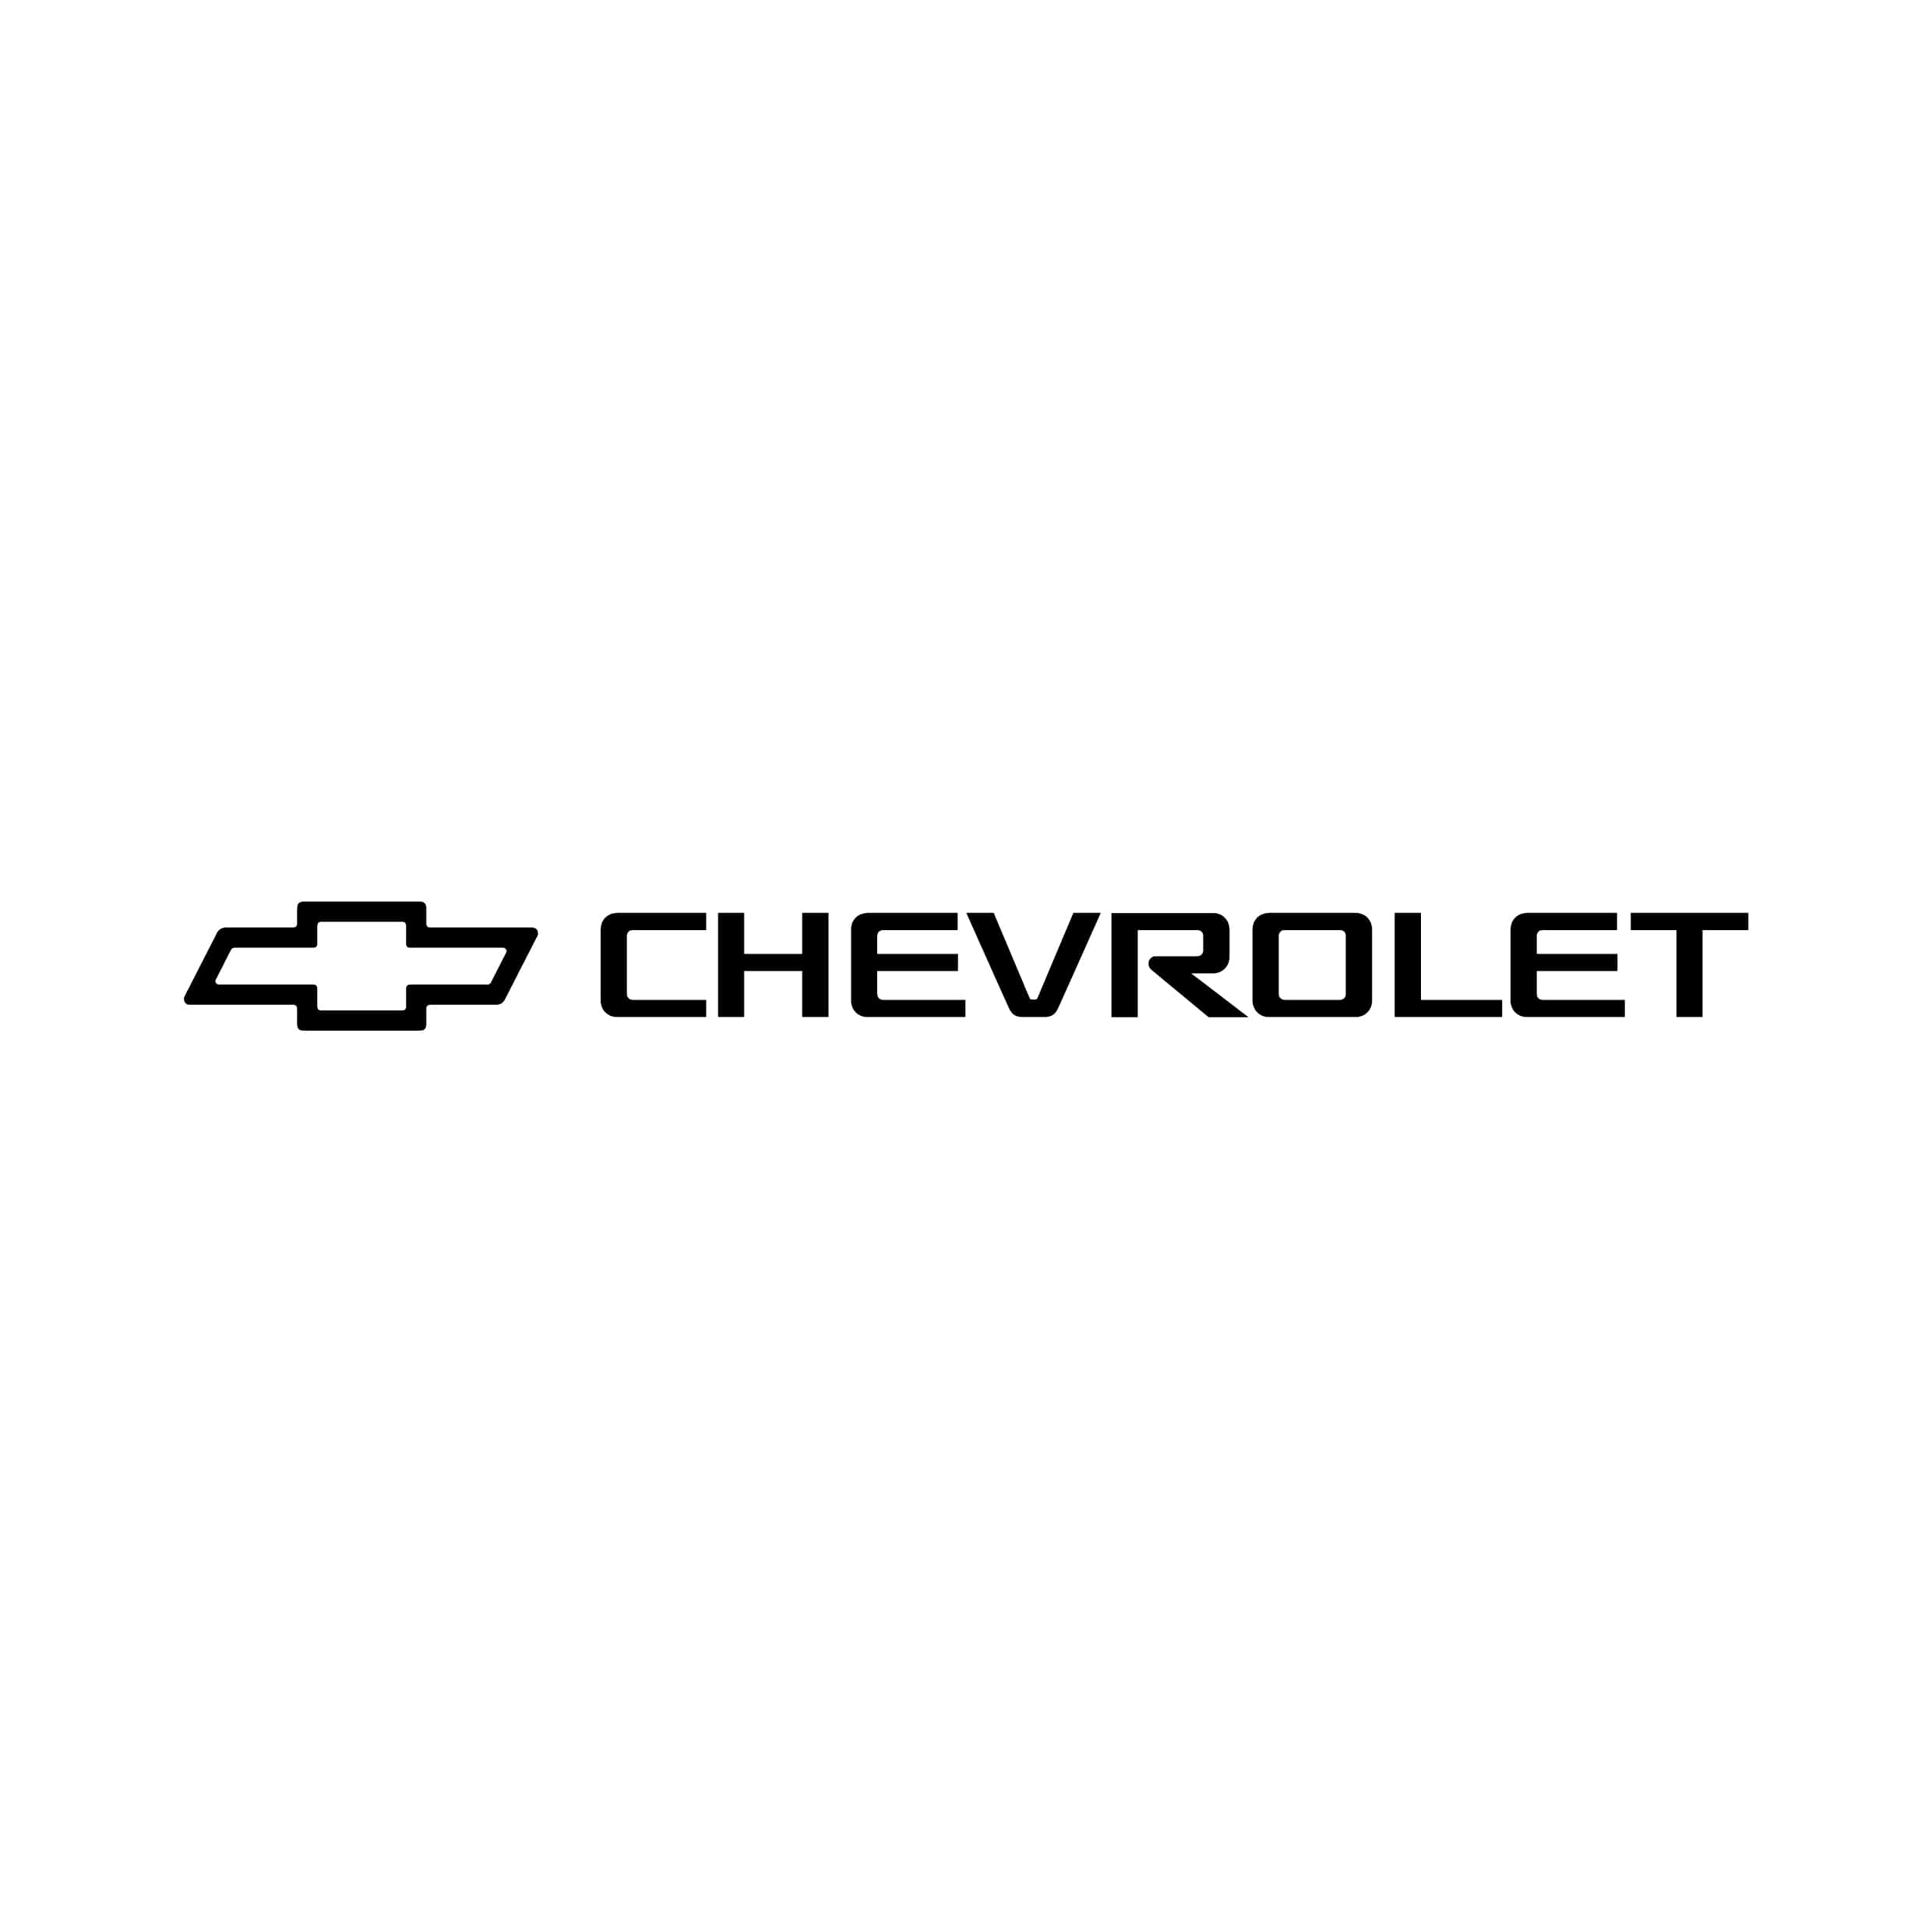 stickers-chevrolet-ref7-autocollant-voiture-sticker-auto-autocollants-decals-sponsors-racing-tuning